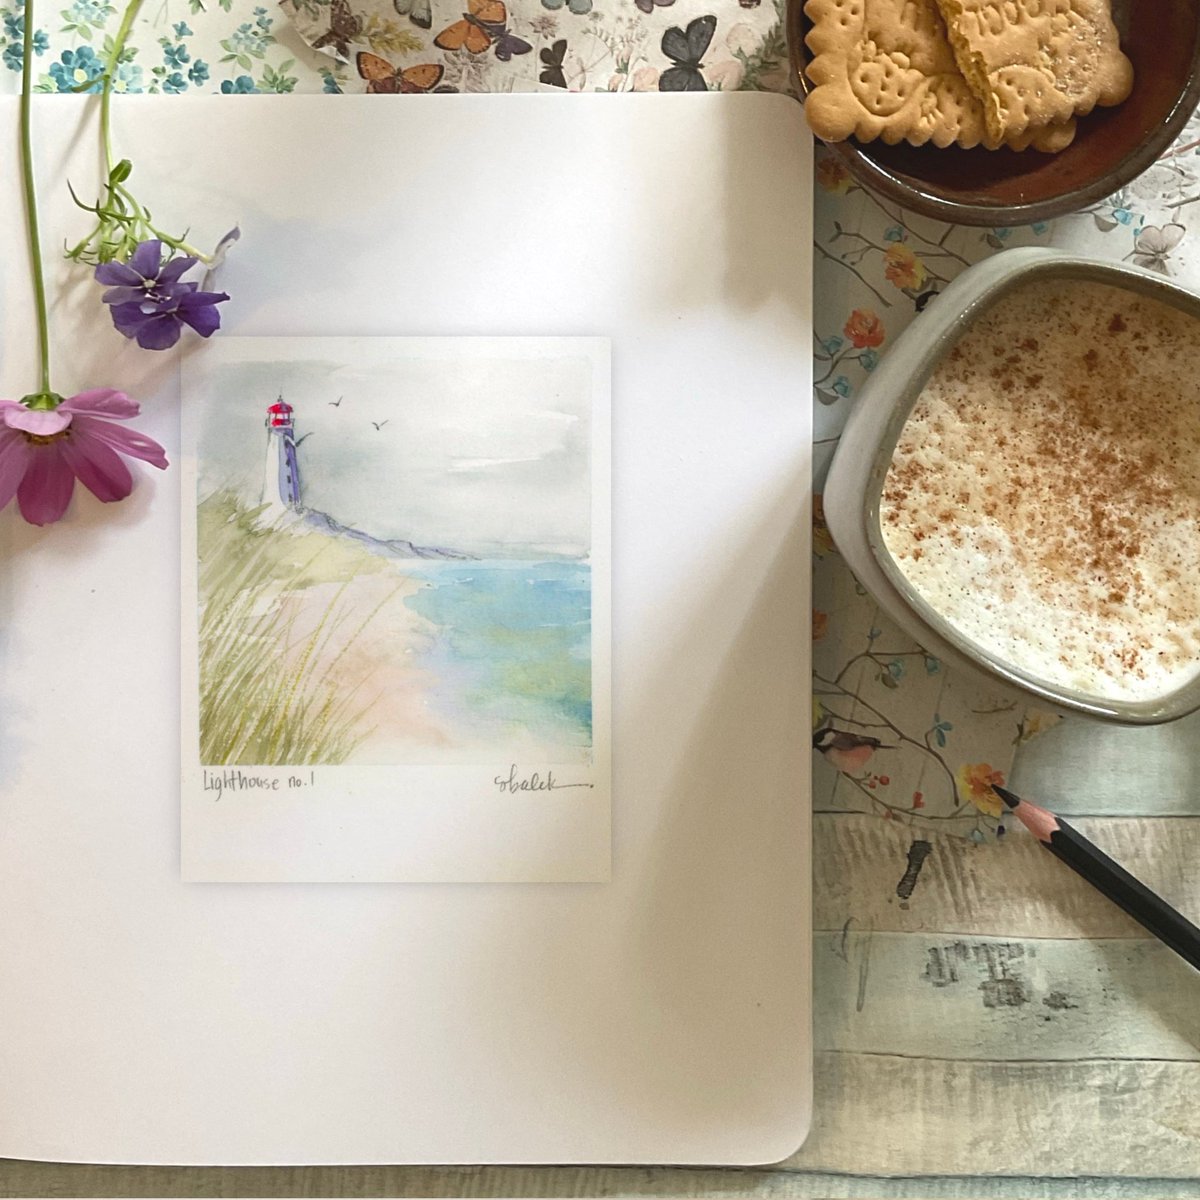 Mini lighthouse watercolor painting styled like a #Polaroid 

#artistsoninstagram #watercolor #lighthouse #coastaldecor #beach #artforbreakfast